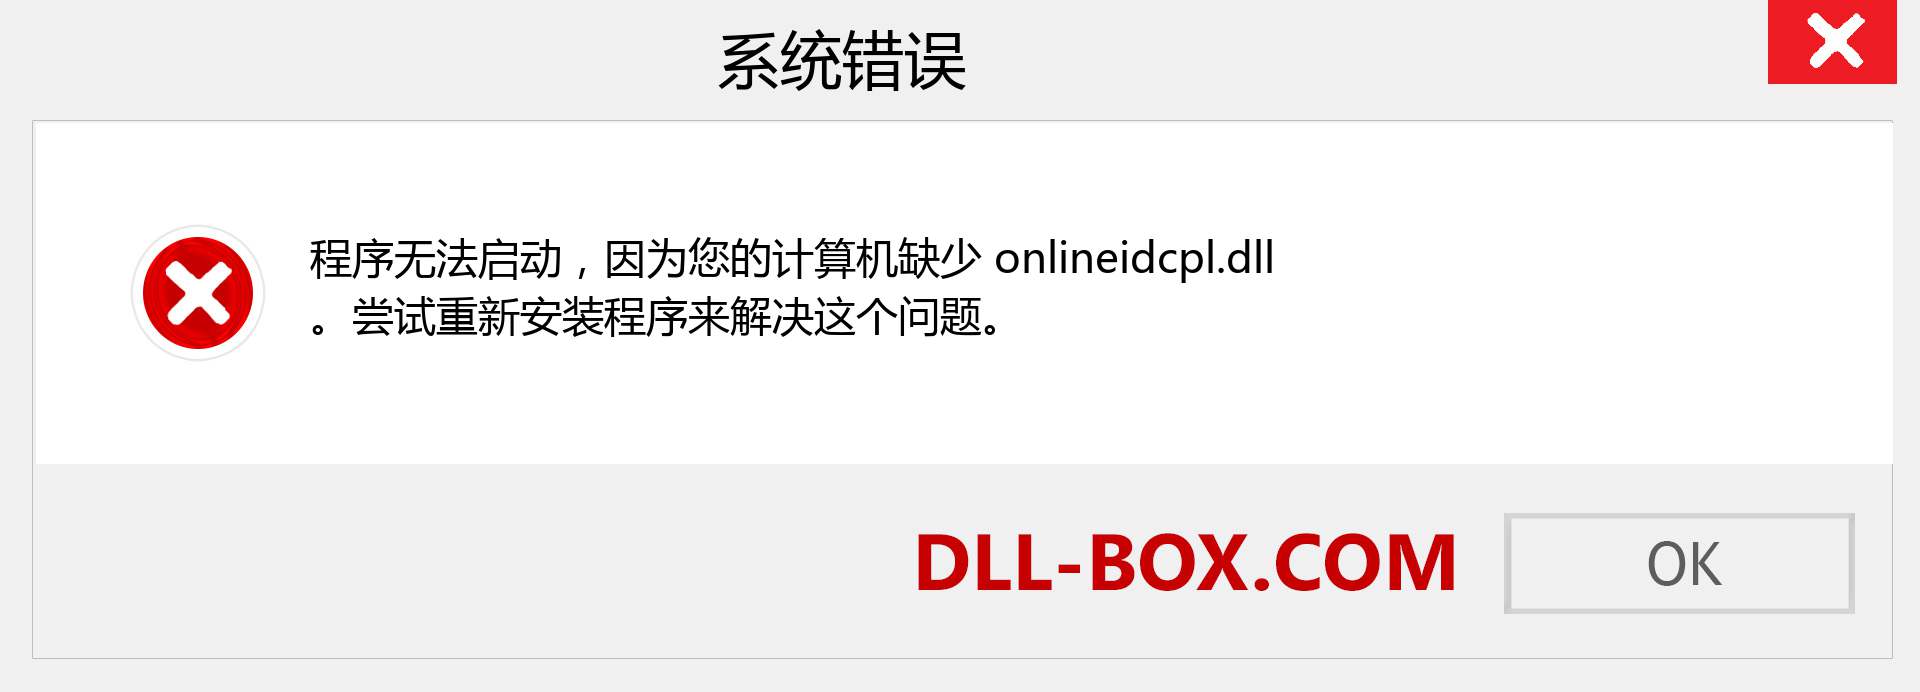 onlineidcpl.dll 文件丢失？。 适用于 Windows 7、8、10 的下载 - 修复 Windows、照片、图像上的 onlineidcpl dll 丢失错误